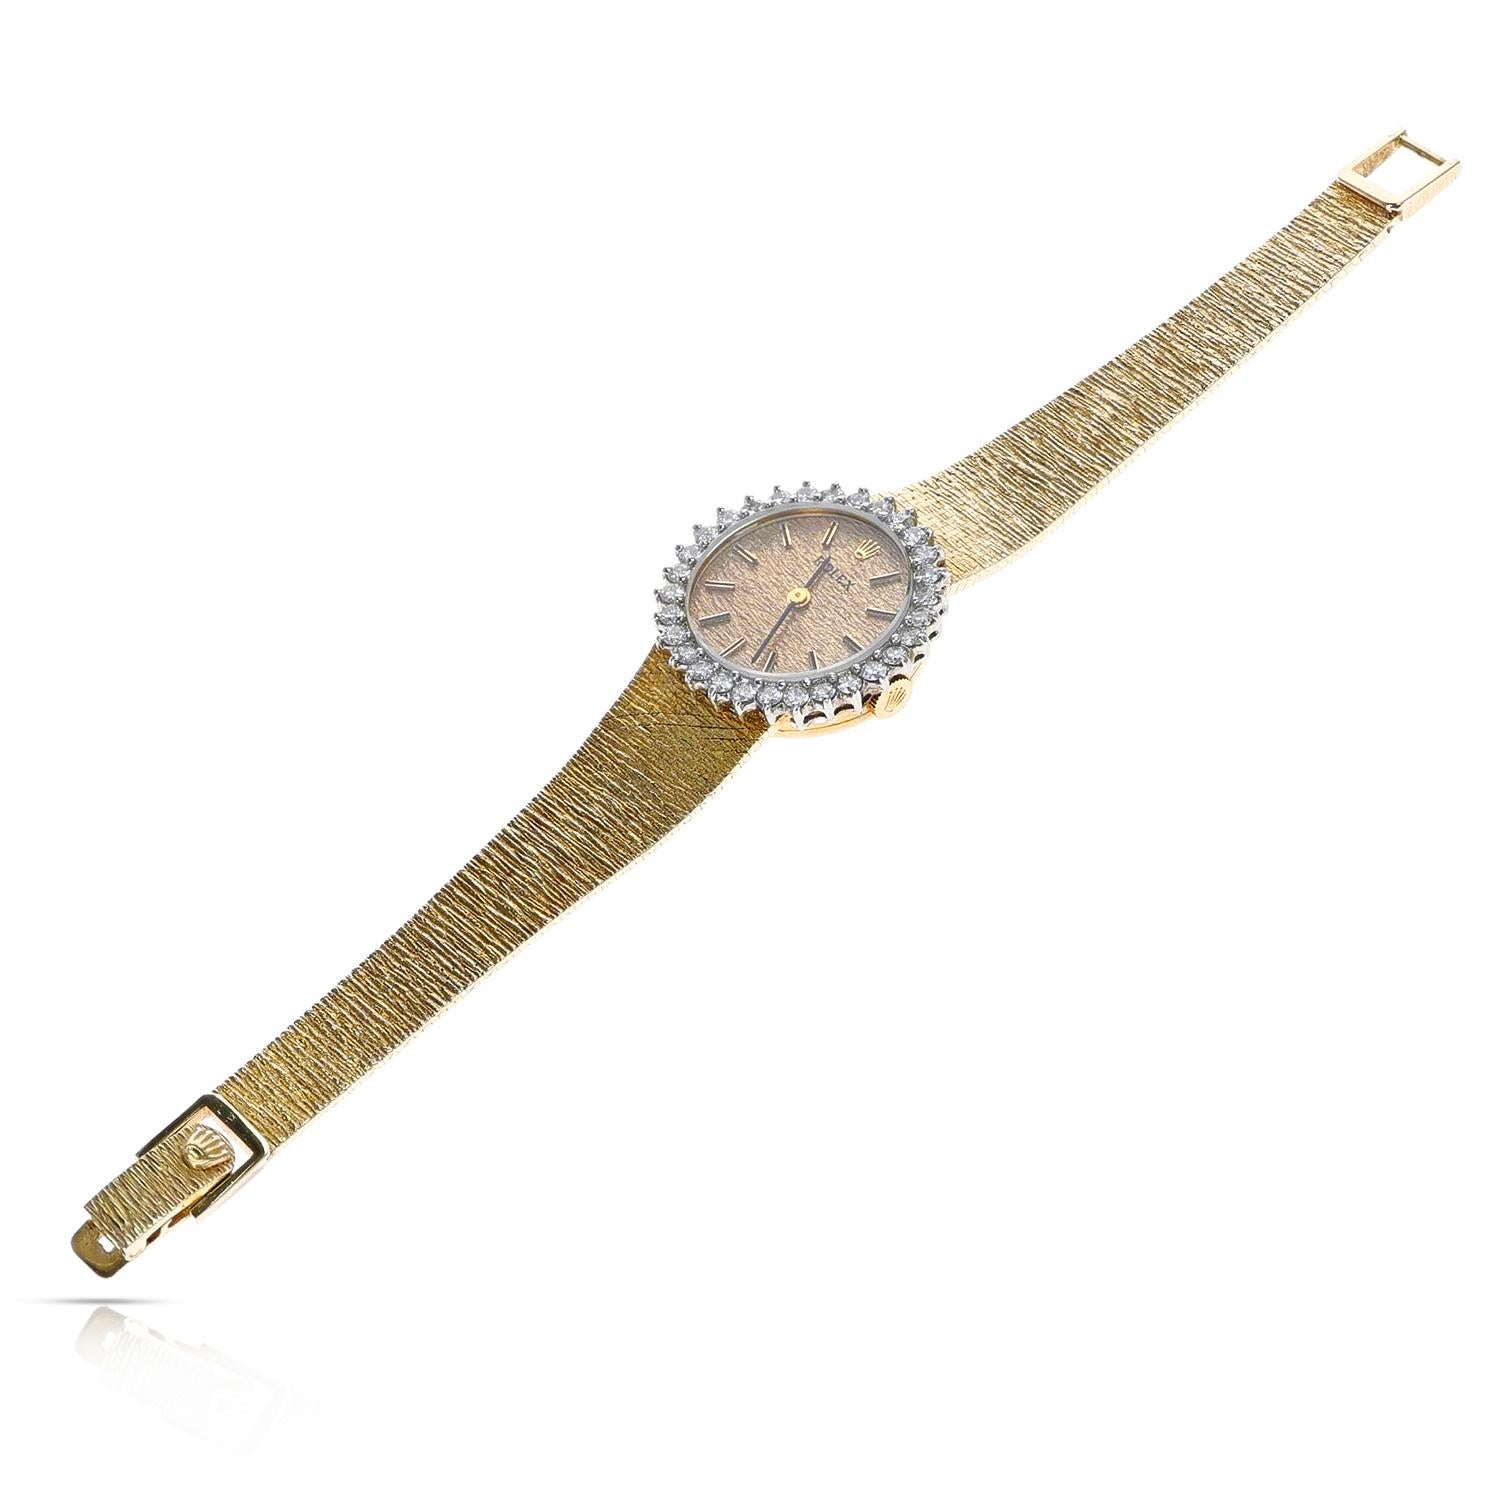 A Vintage Rolex 14K Yellow Gold Diamond Bezel Watch. Length: 6.50